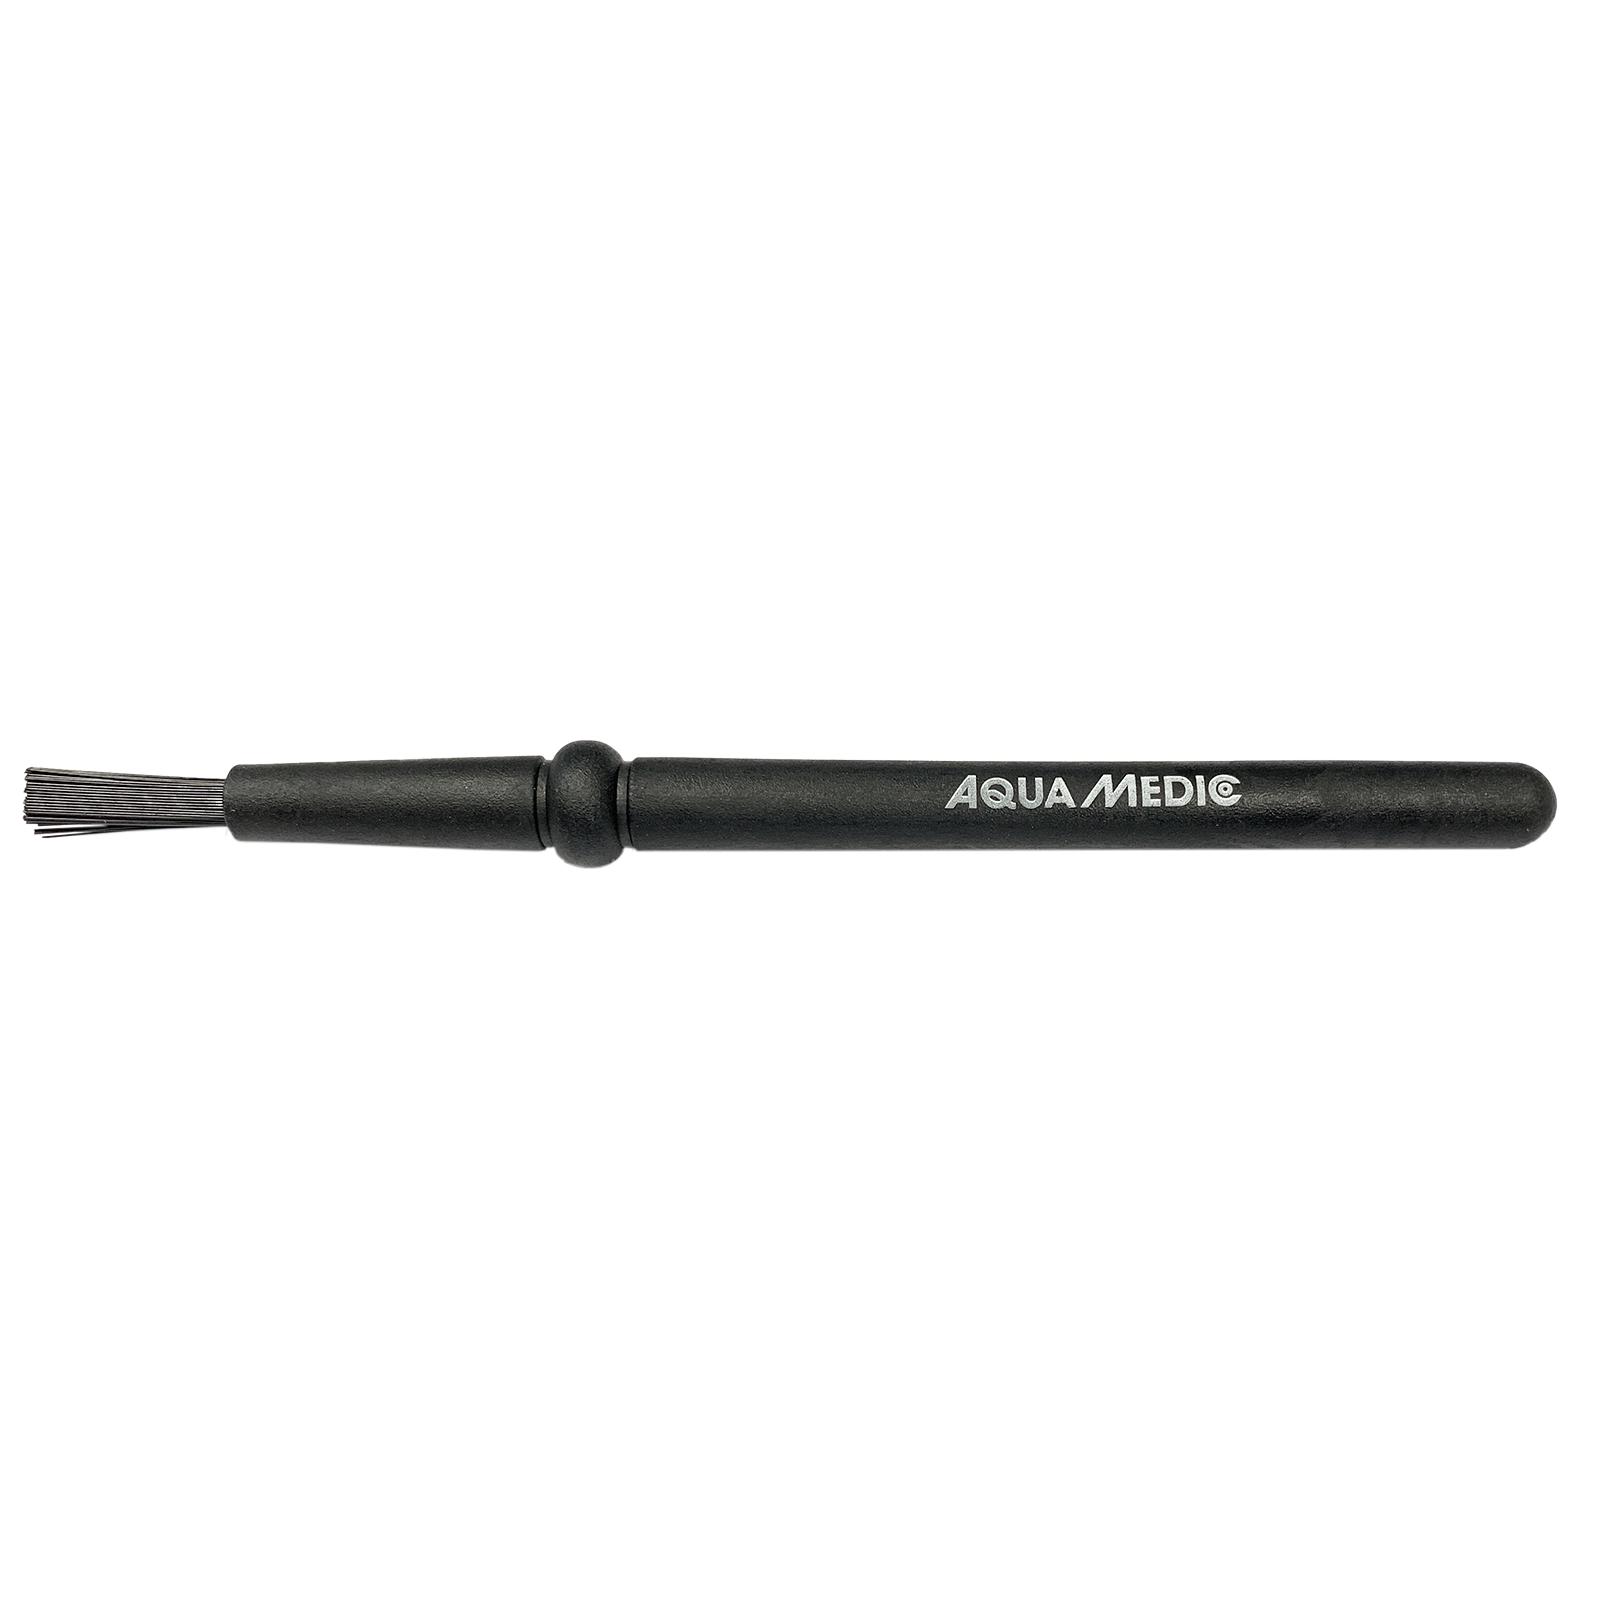 Aqua Medic pump brush